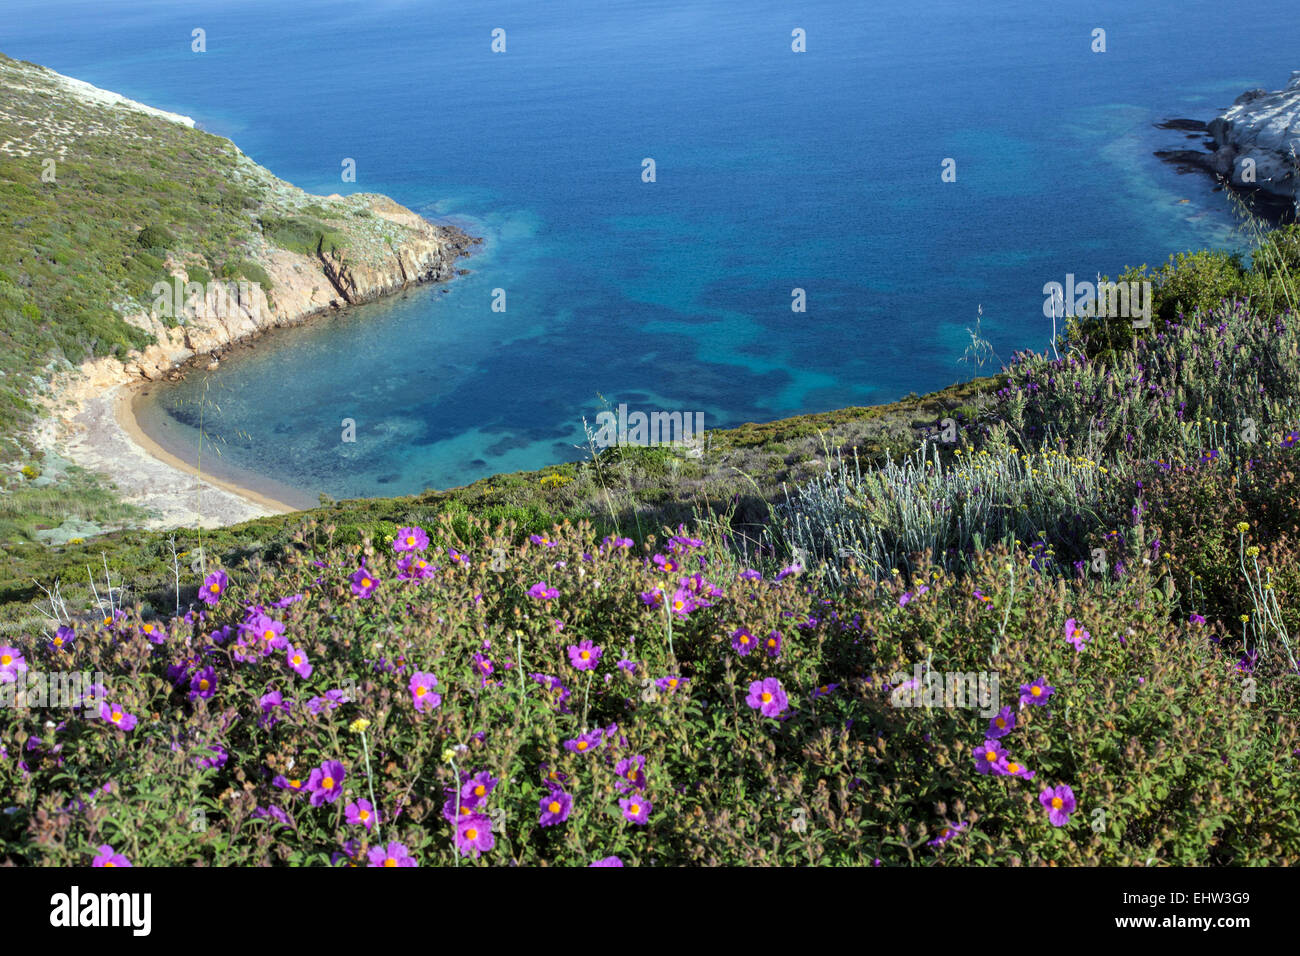 THE OLIVE RIVIERA, AEGEAN SEA, TURKEY Stock Photo